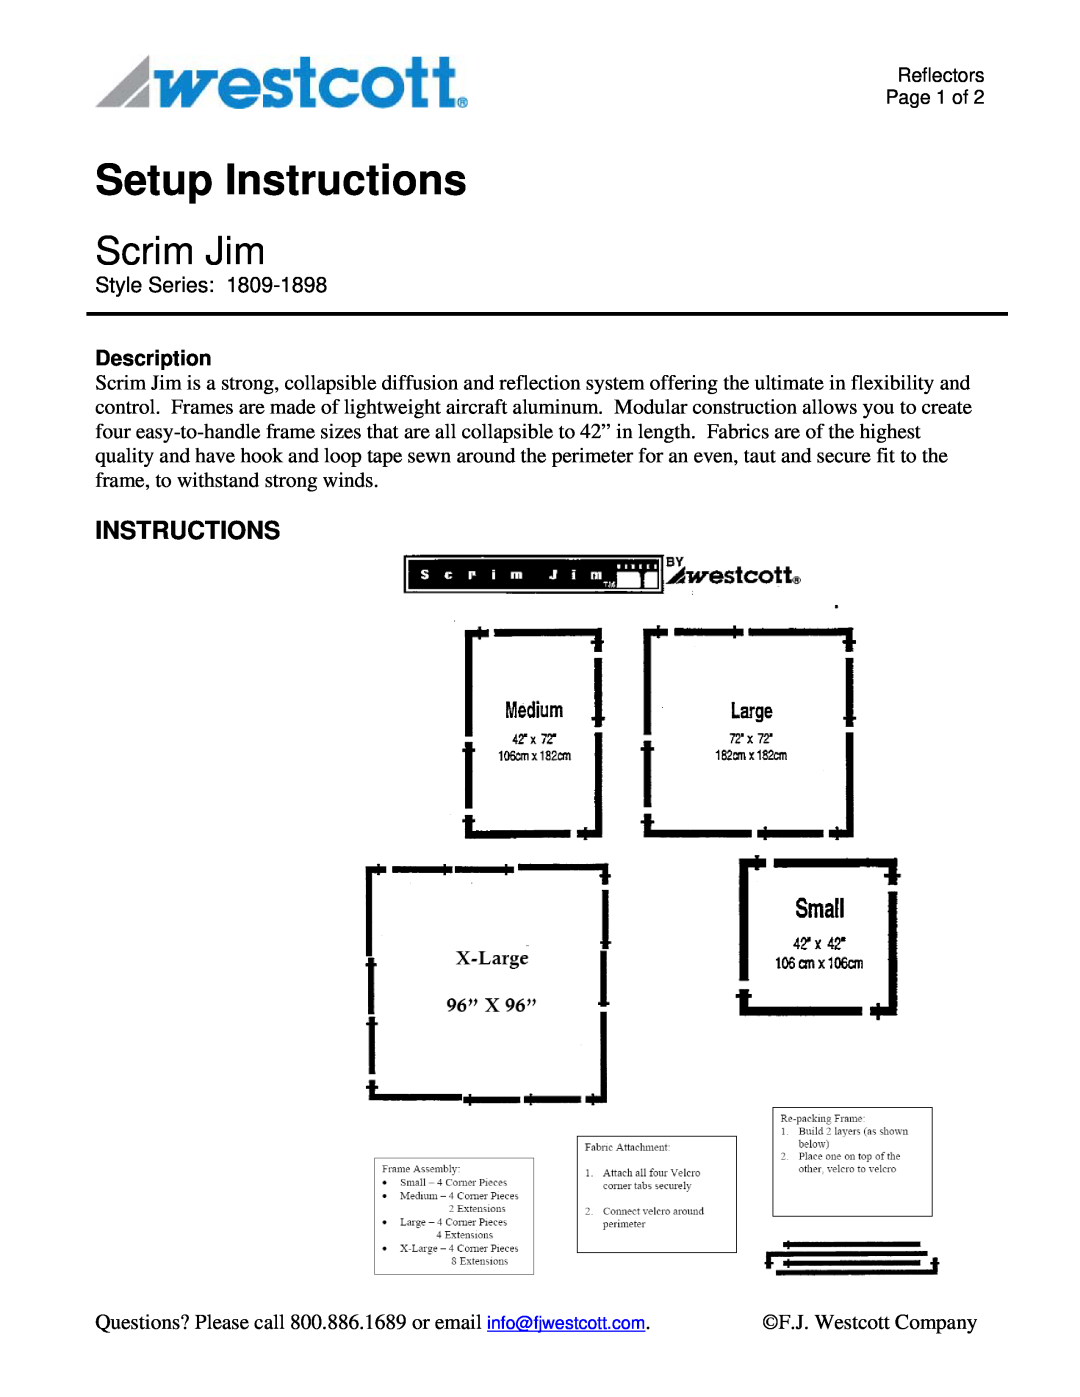 Westcott 1894 manual Setup Instructions, Scrim Jim, Description 